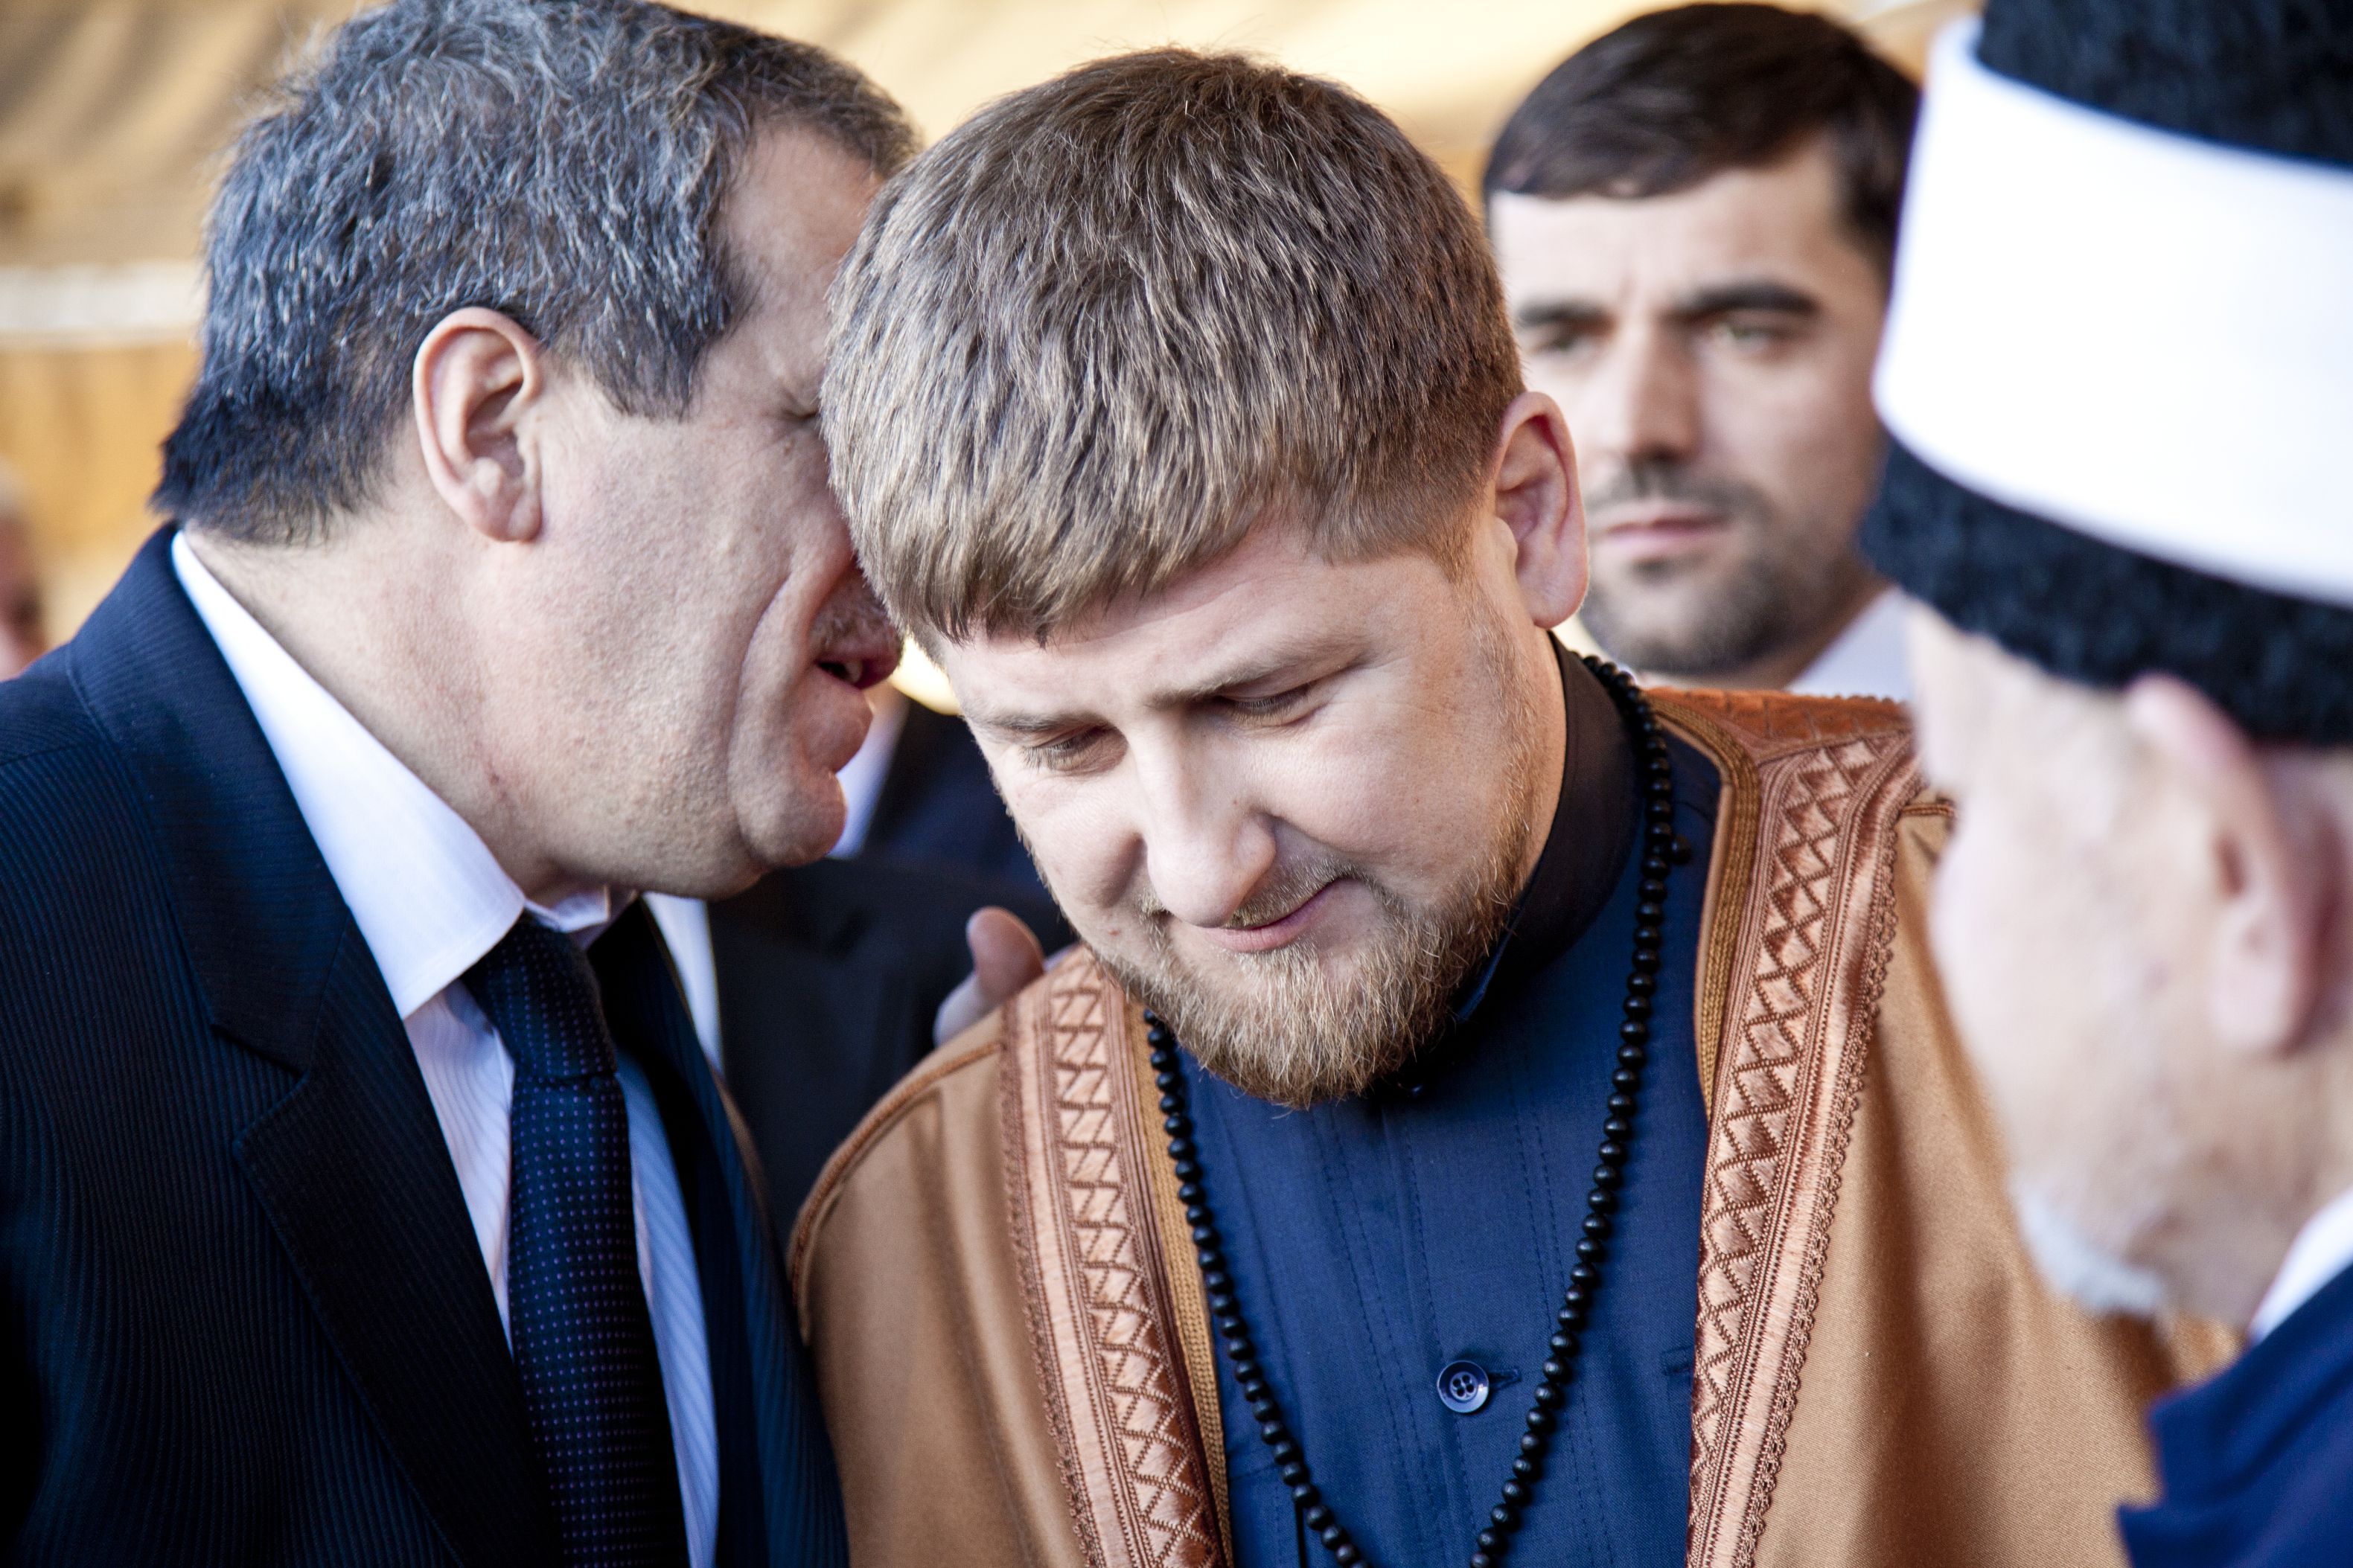 AMMAN, JORDAN - MAR 15: Vice president Ziad Sabsab translates to Chechen president Ramzan Kadyrov after accepting gift during visit to Jordan. March 15, 2011 in Amman, Jordan.